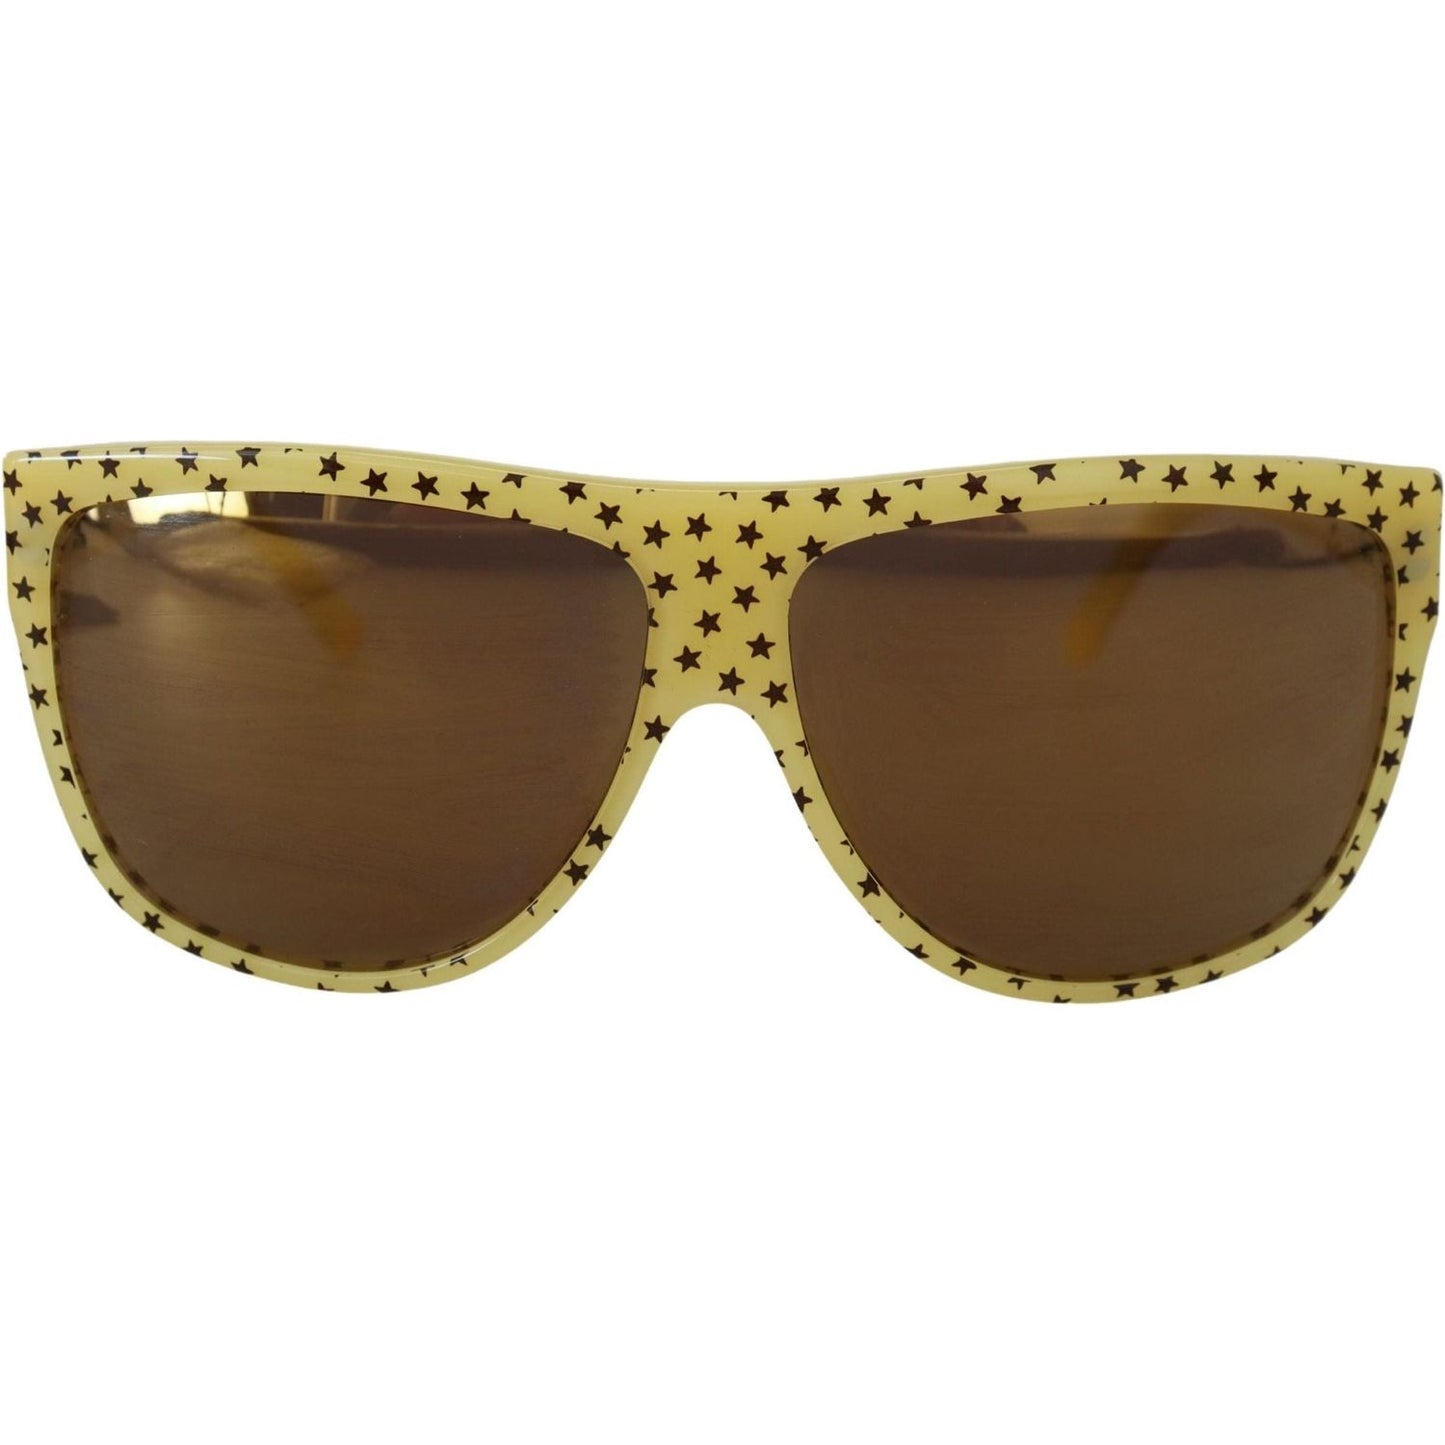 Dolce & Gabbana Stellar Chic Square Sunglasses in Yellow yellow-stars-acetate-square-shades-dg4125-sunglasses IMG_5267-scaled-62bd9b12-ec6.jpg